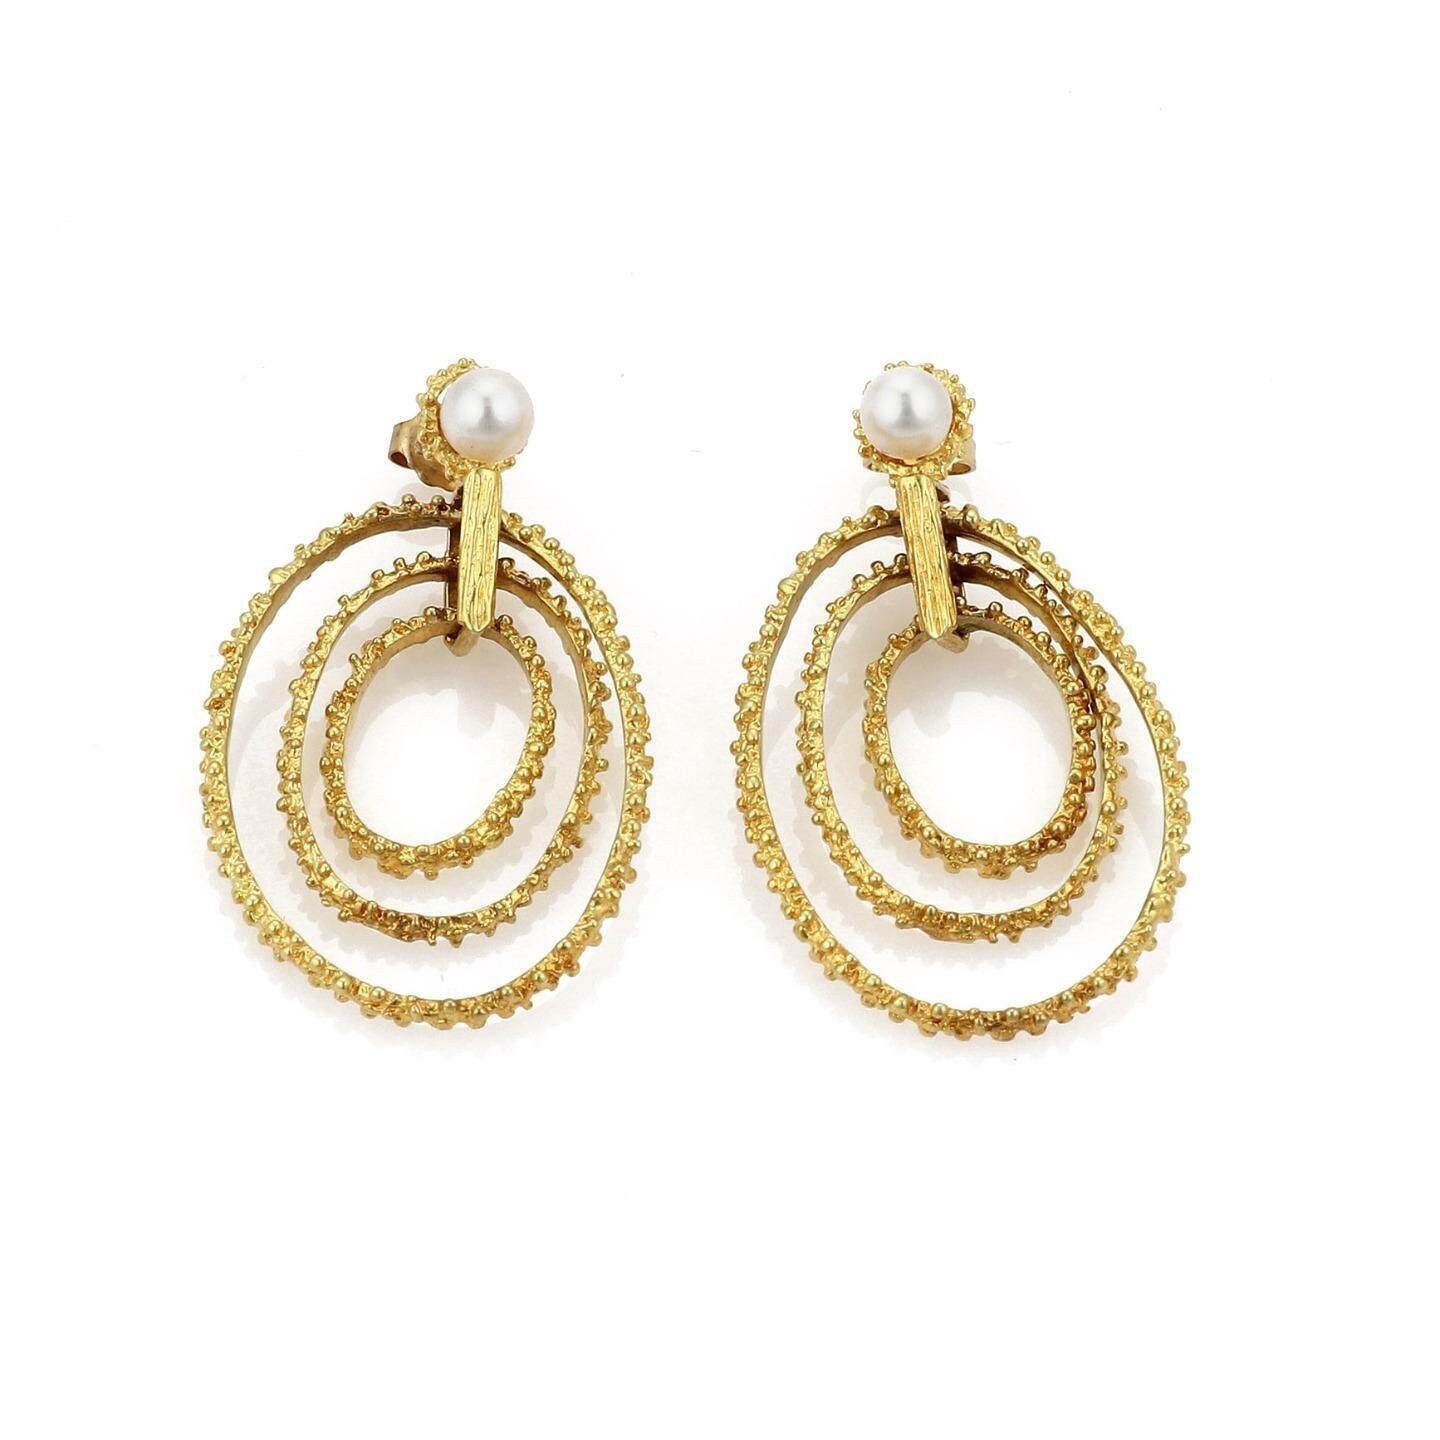 Vintage 14K Ygold Pearl Dangle Earrings